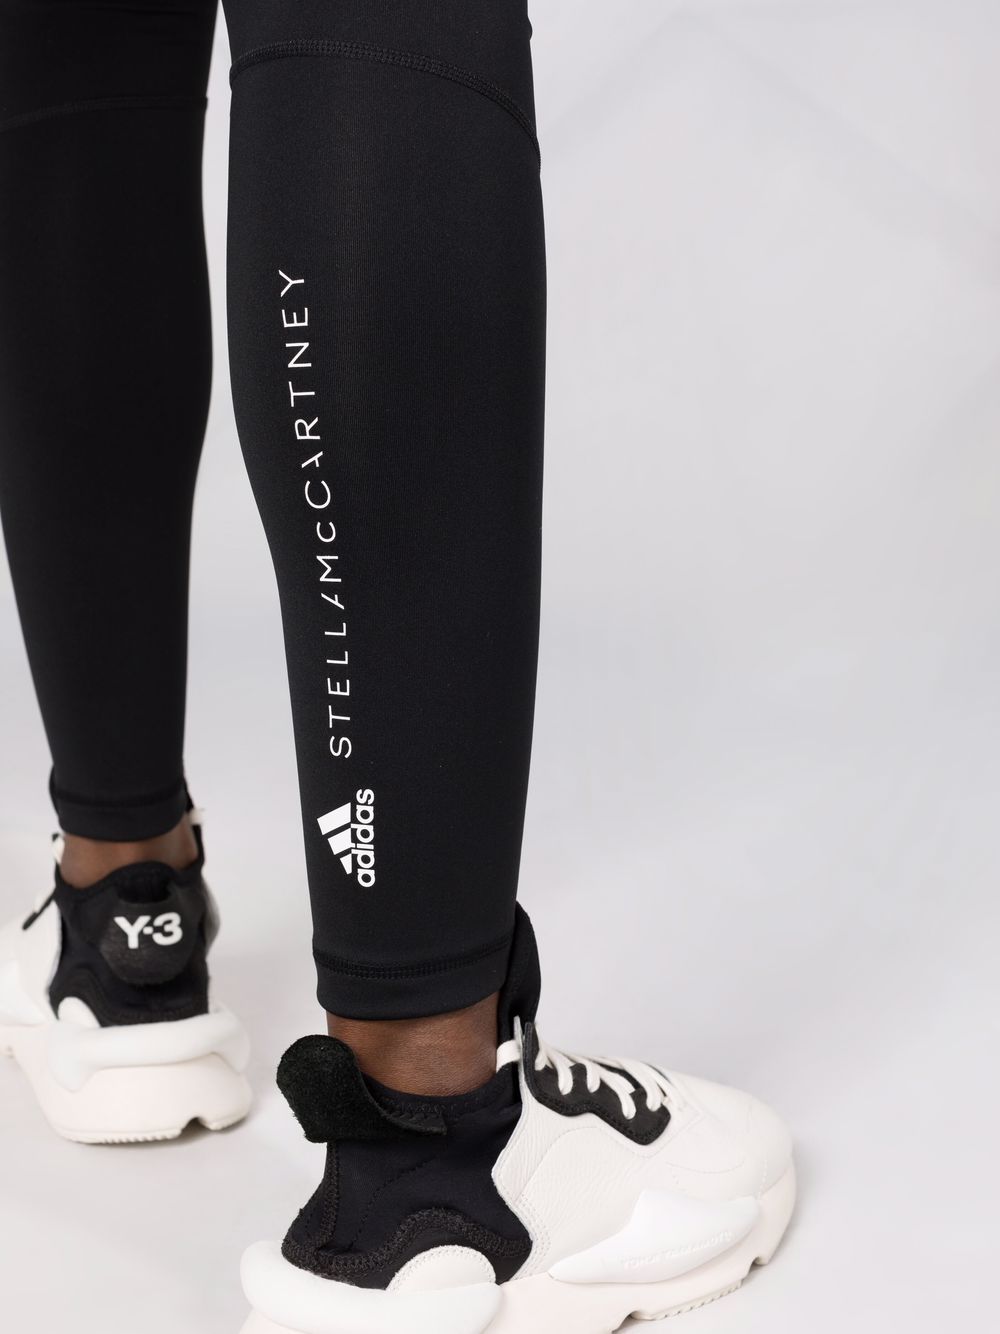 фото Adidas by stella mccartney легинсы truepurpose с завышенной талией